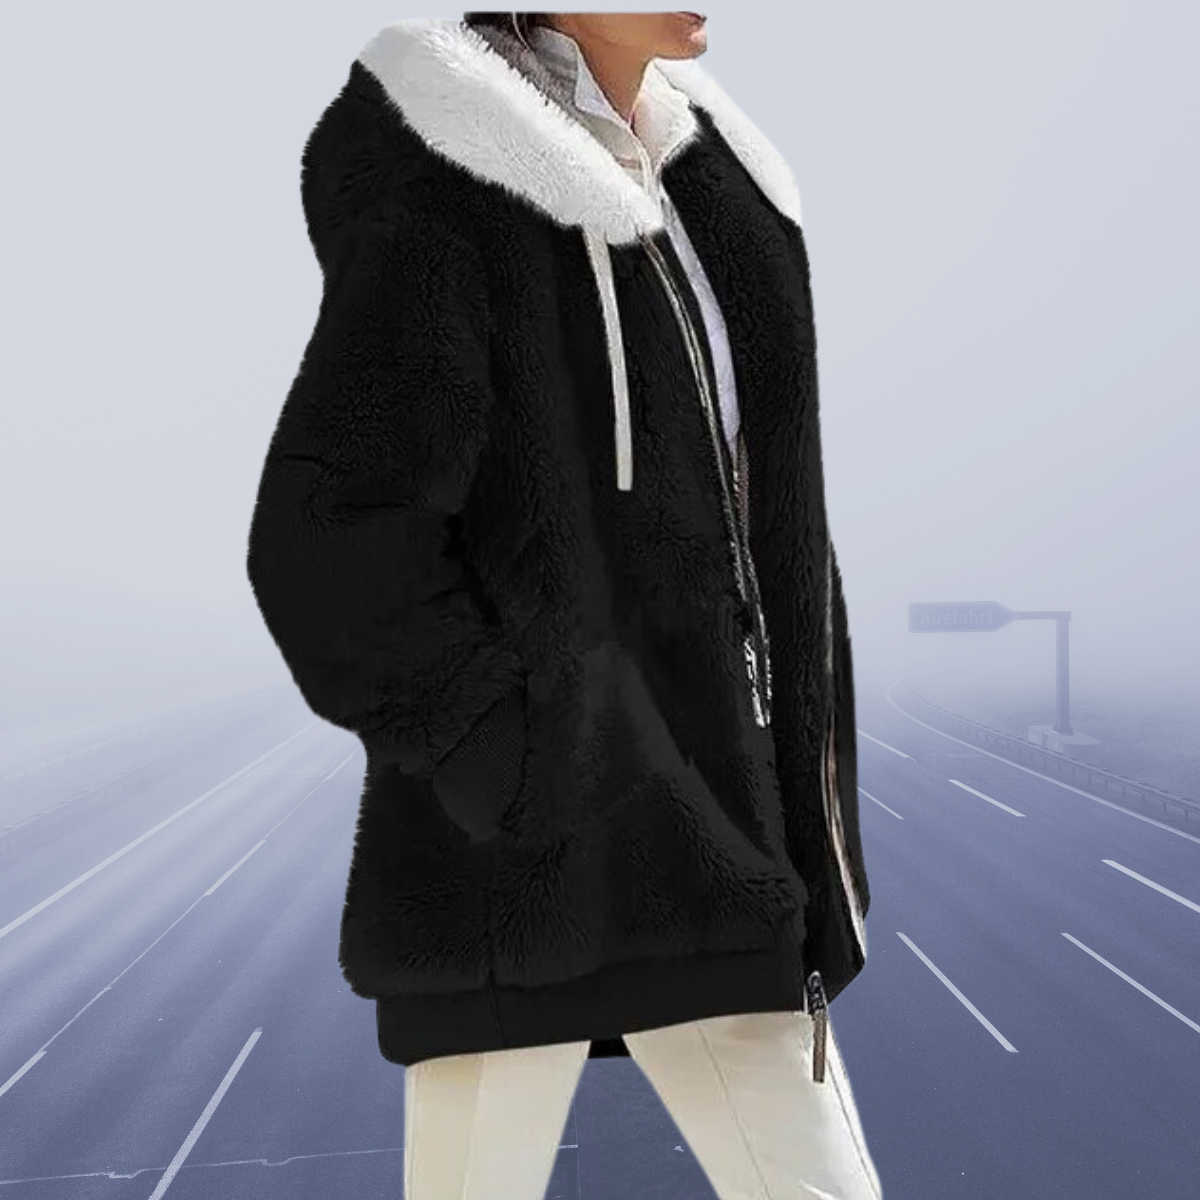 Mandy™ - Blød og varm jakke til vinteren!